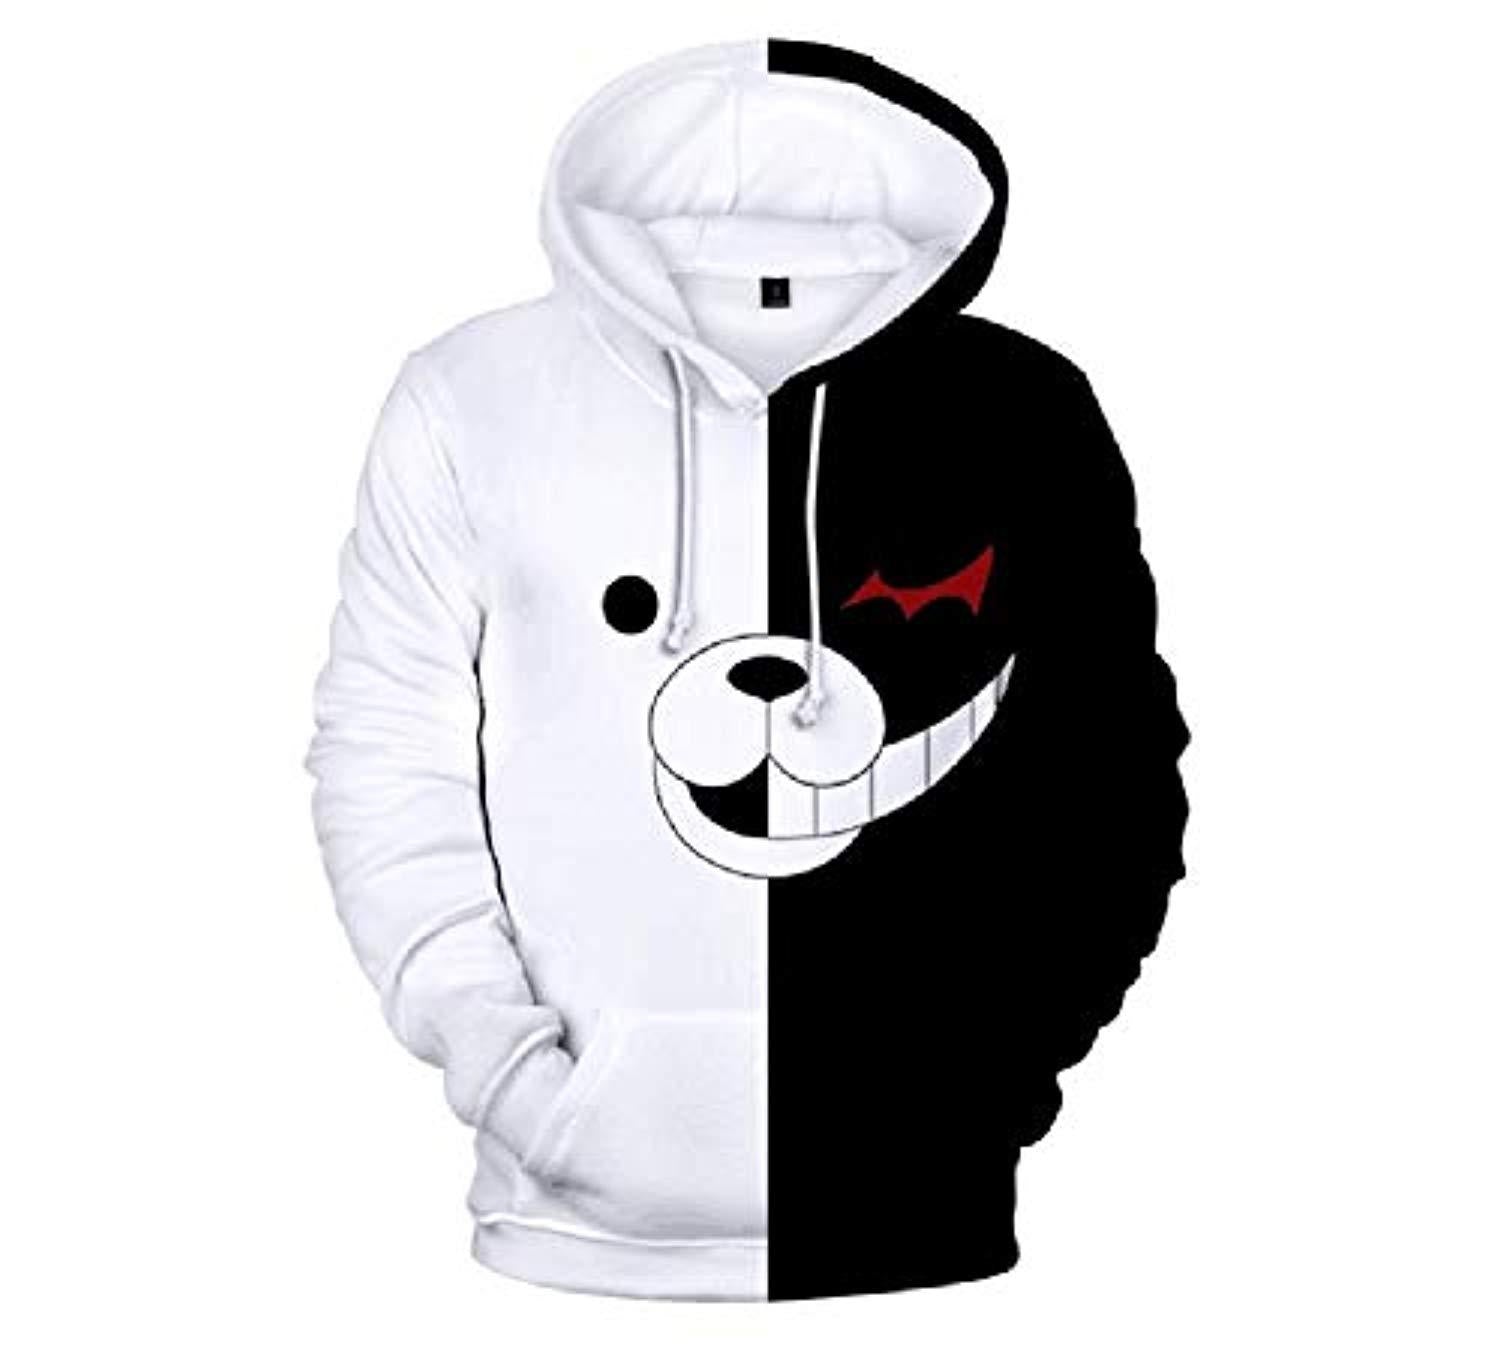 Danganronpa Monokuma Black&White Bear Halloween 3D Pullover Hoodie Jacket Cosplay Costume Unisex